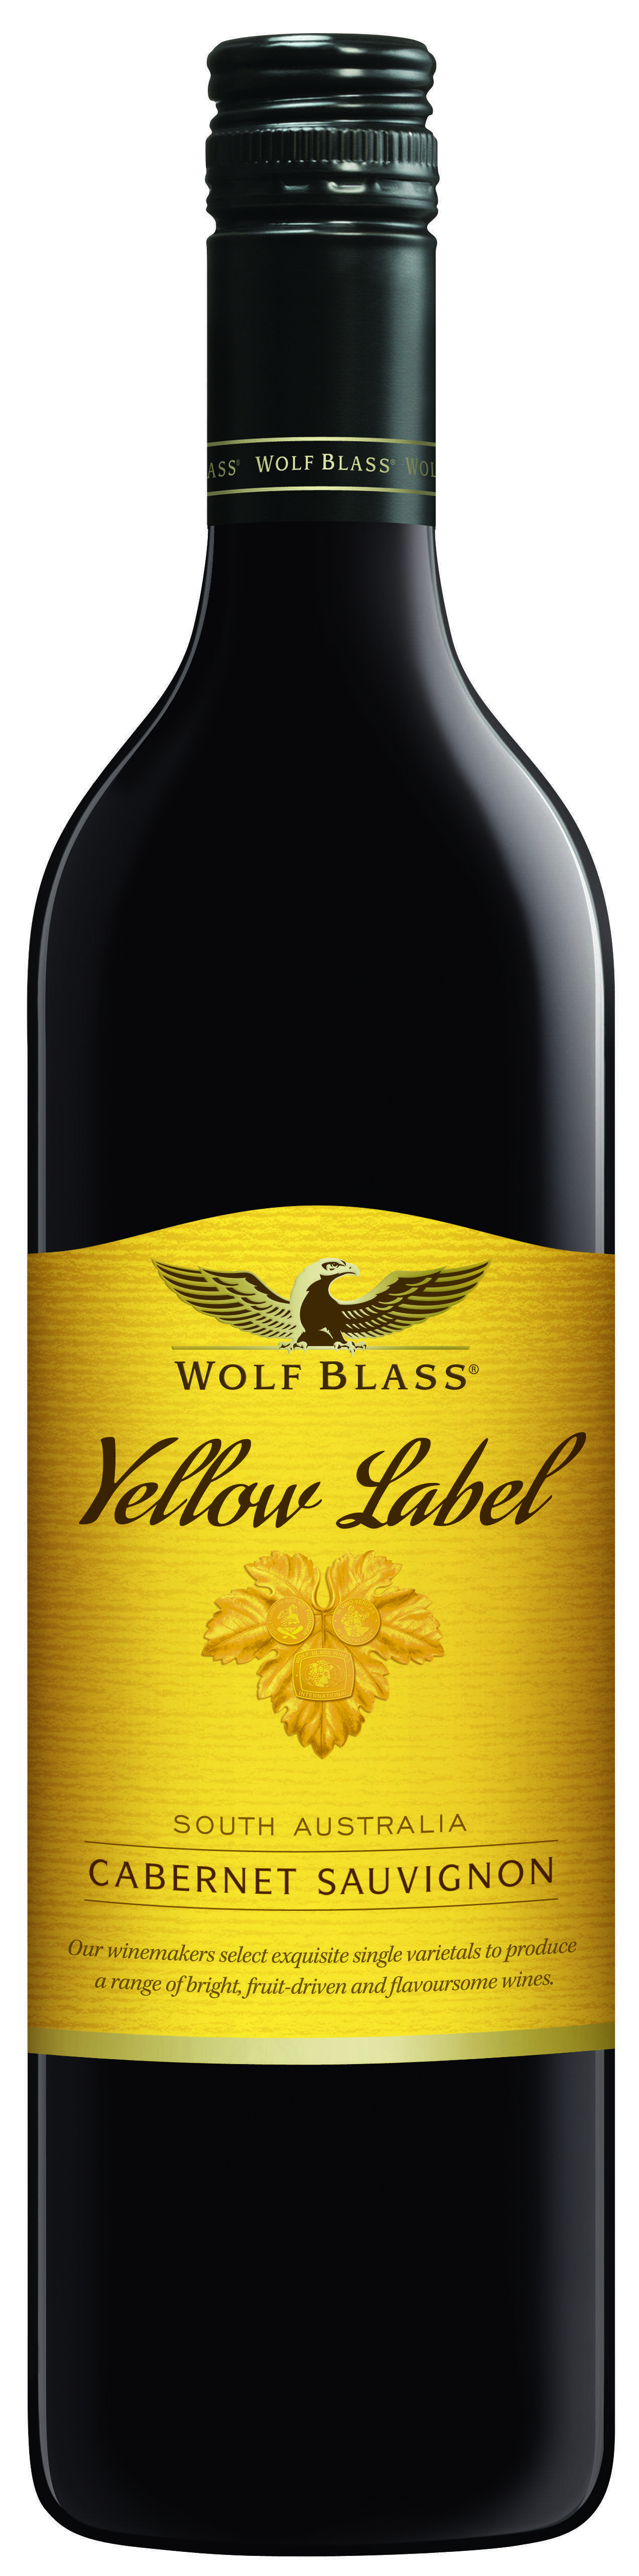 Wolf Blass Yellow Label Cabernet Sauvignon (Australia) 2012 75cl